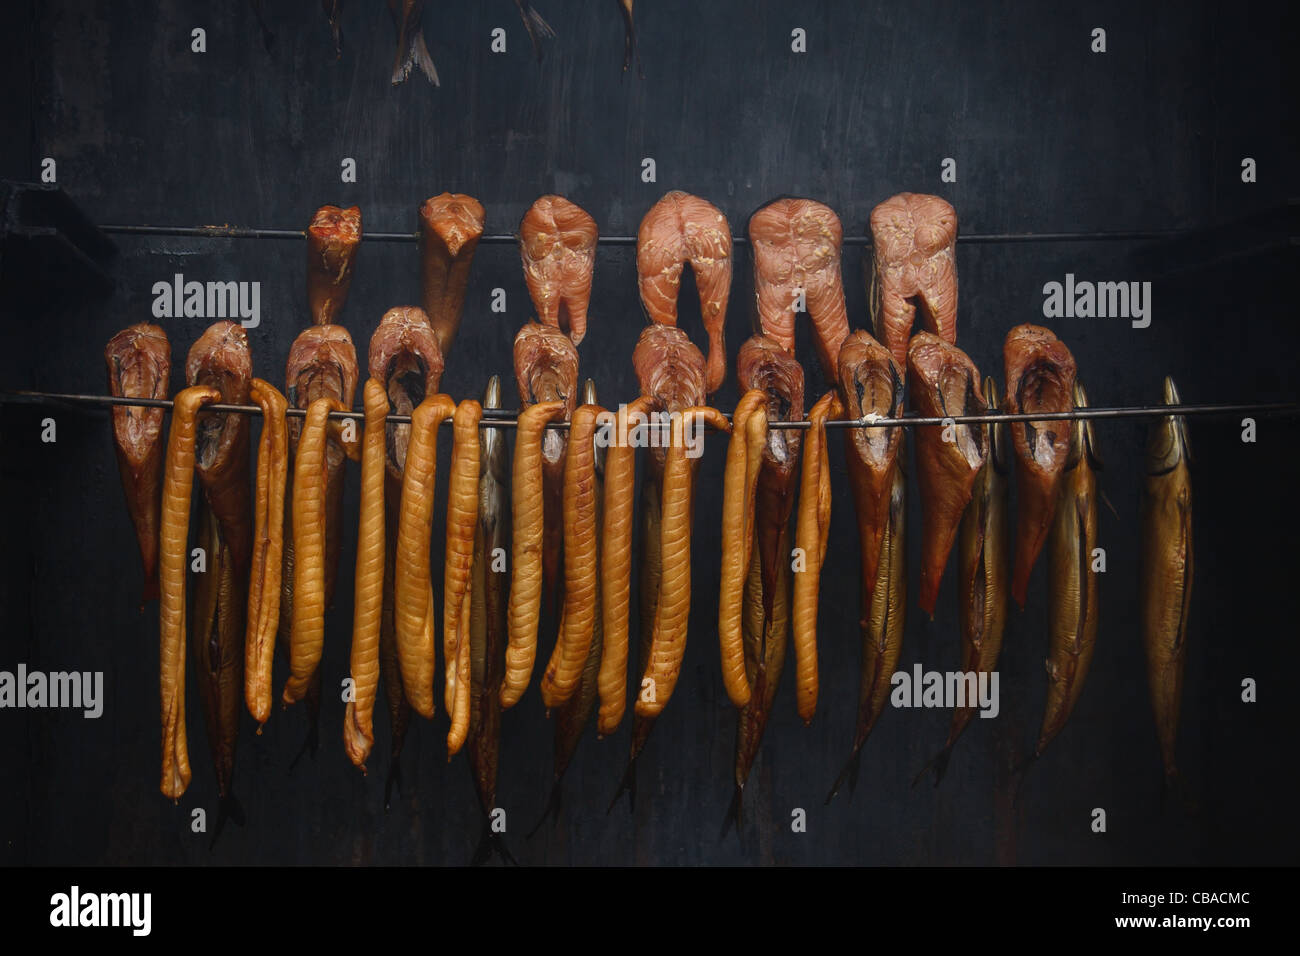 Fish smoking hanging hi-res stock photography and images - Alamy